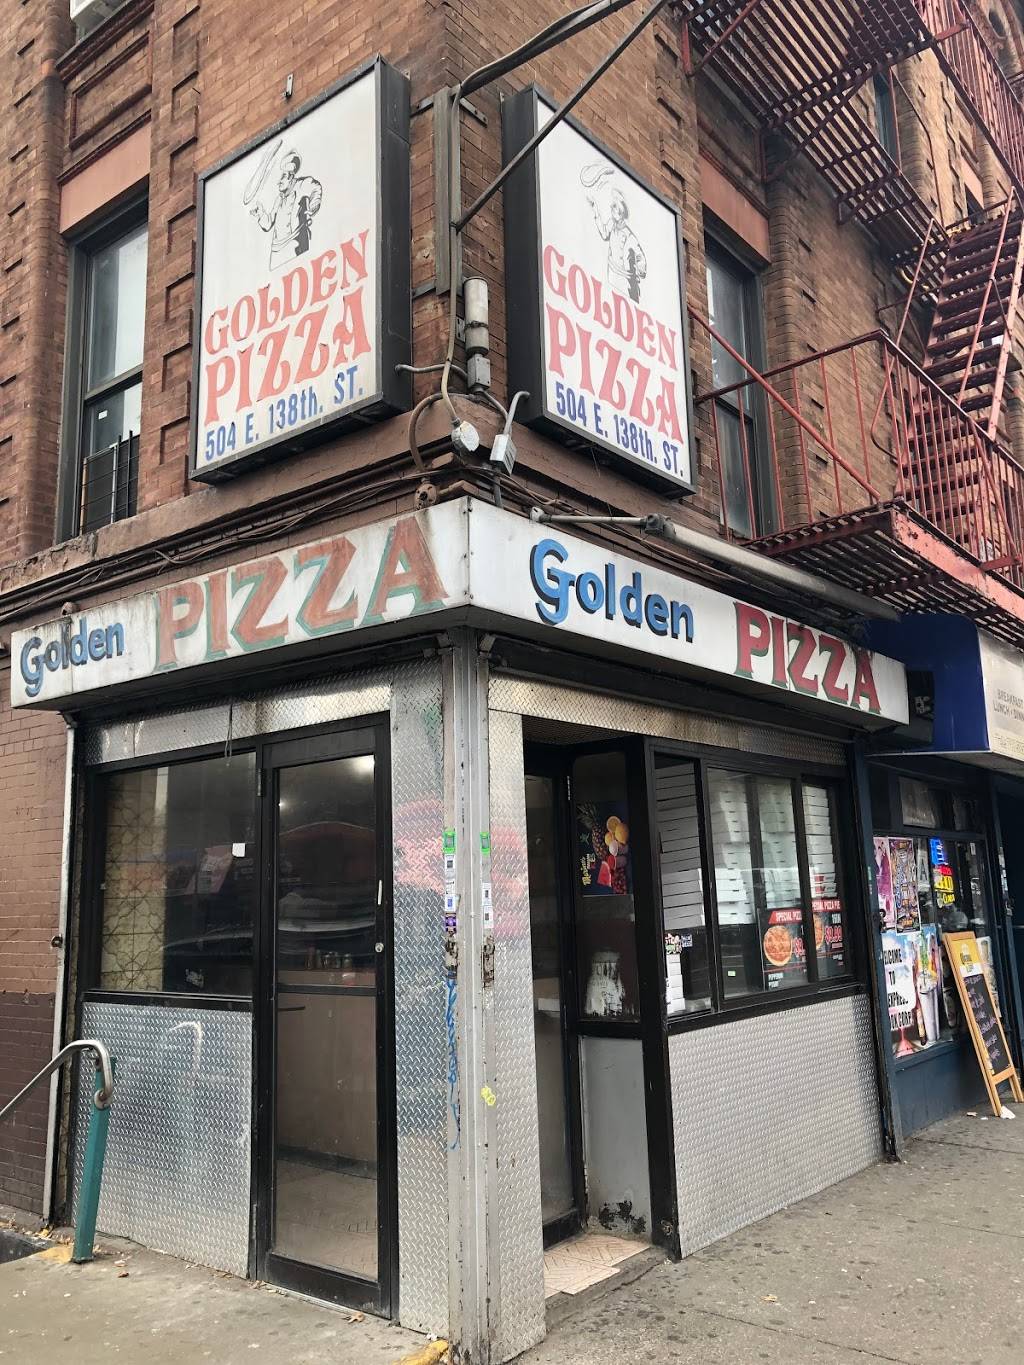 Golden Pizza | restaurant | 504 E 138th St, Bronx, NY 10454, USA | 7186658328 OR +1 718-665-8328